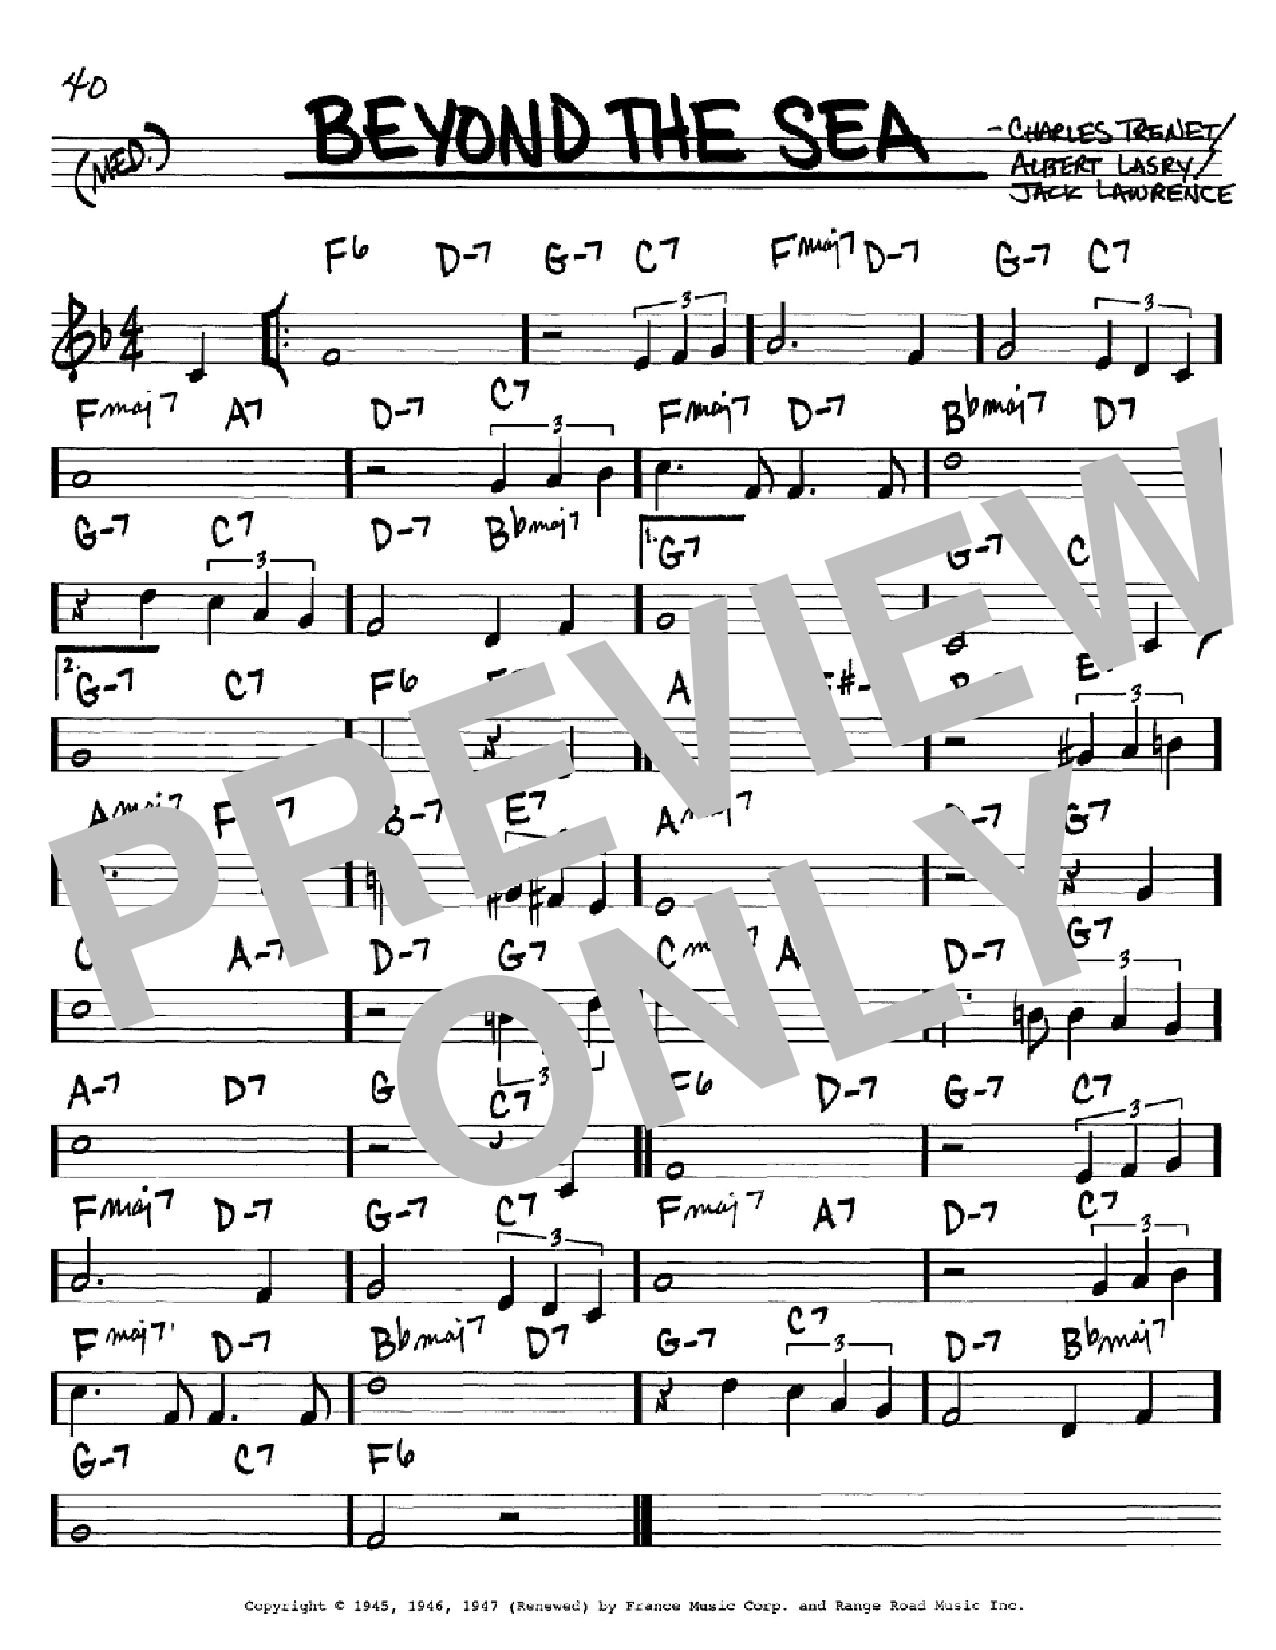 Beyond the sea piano sheet music pdf